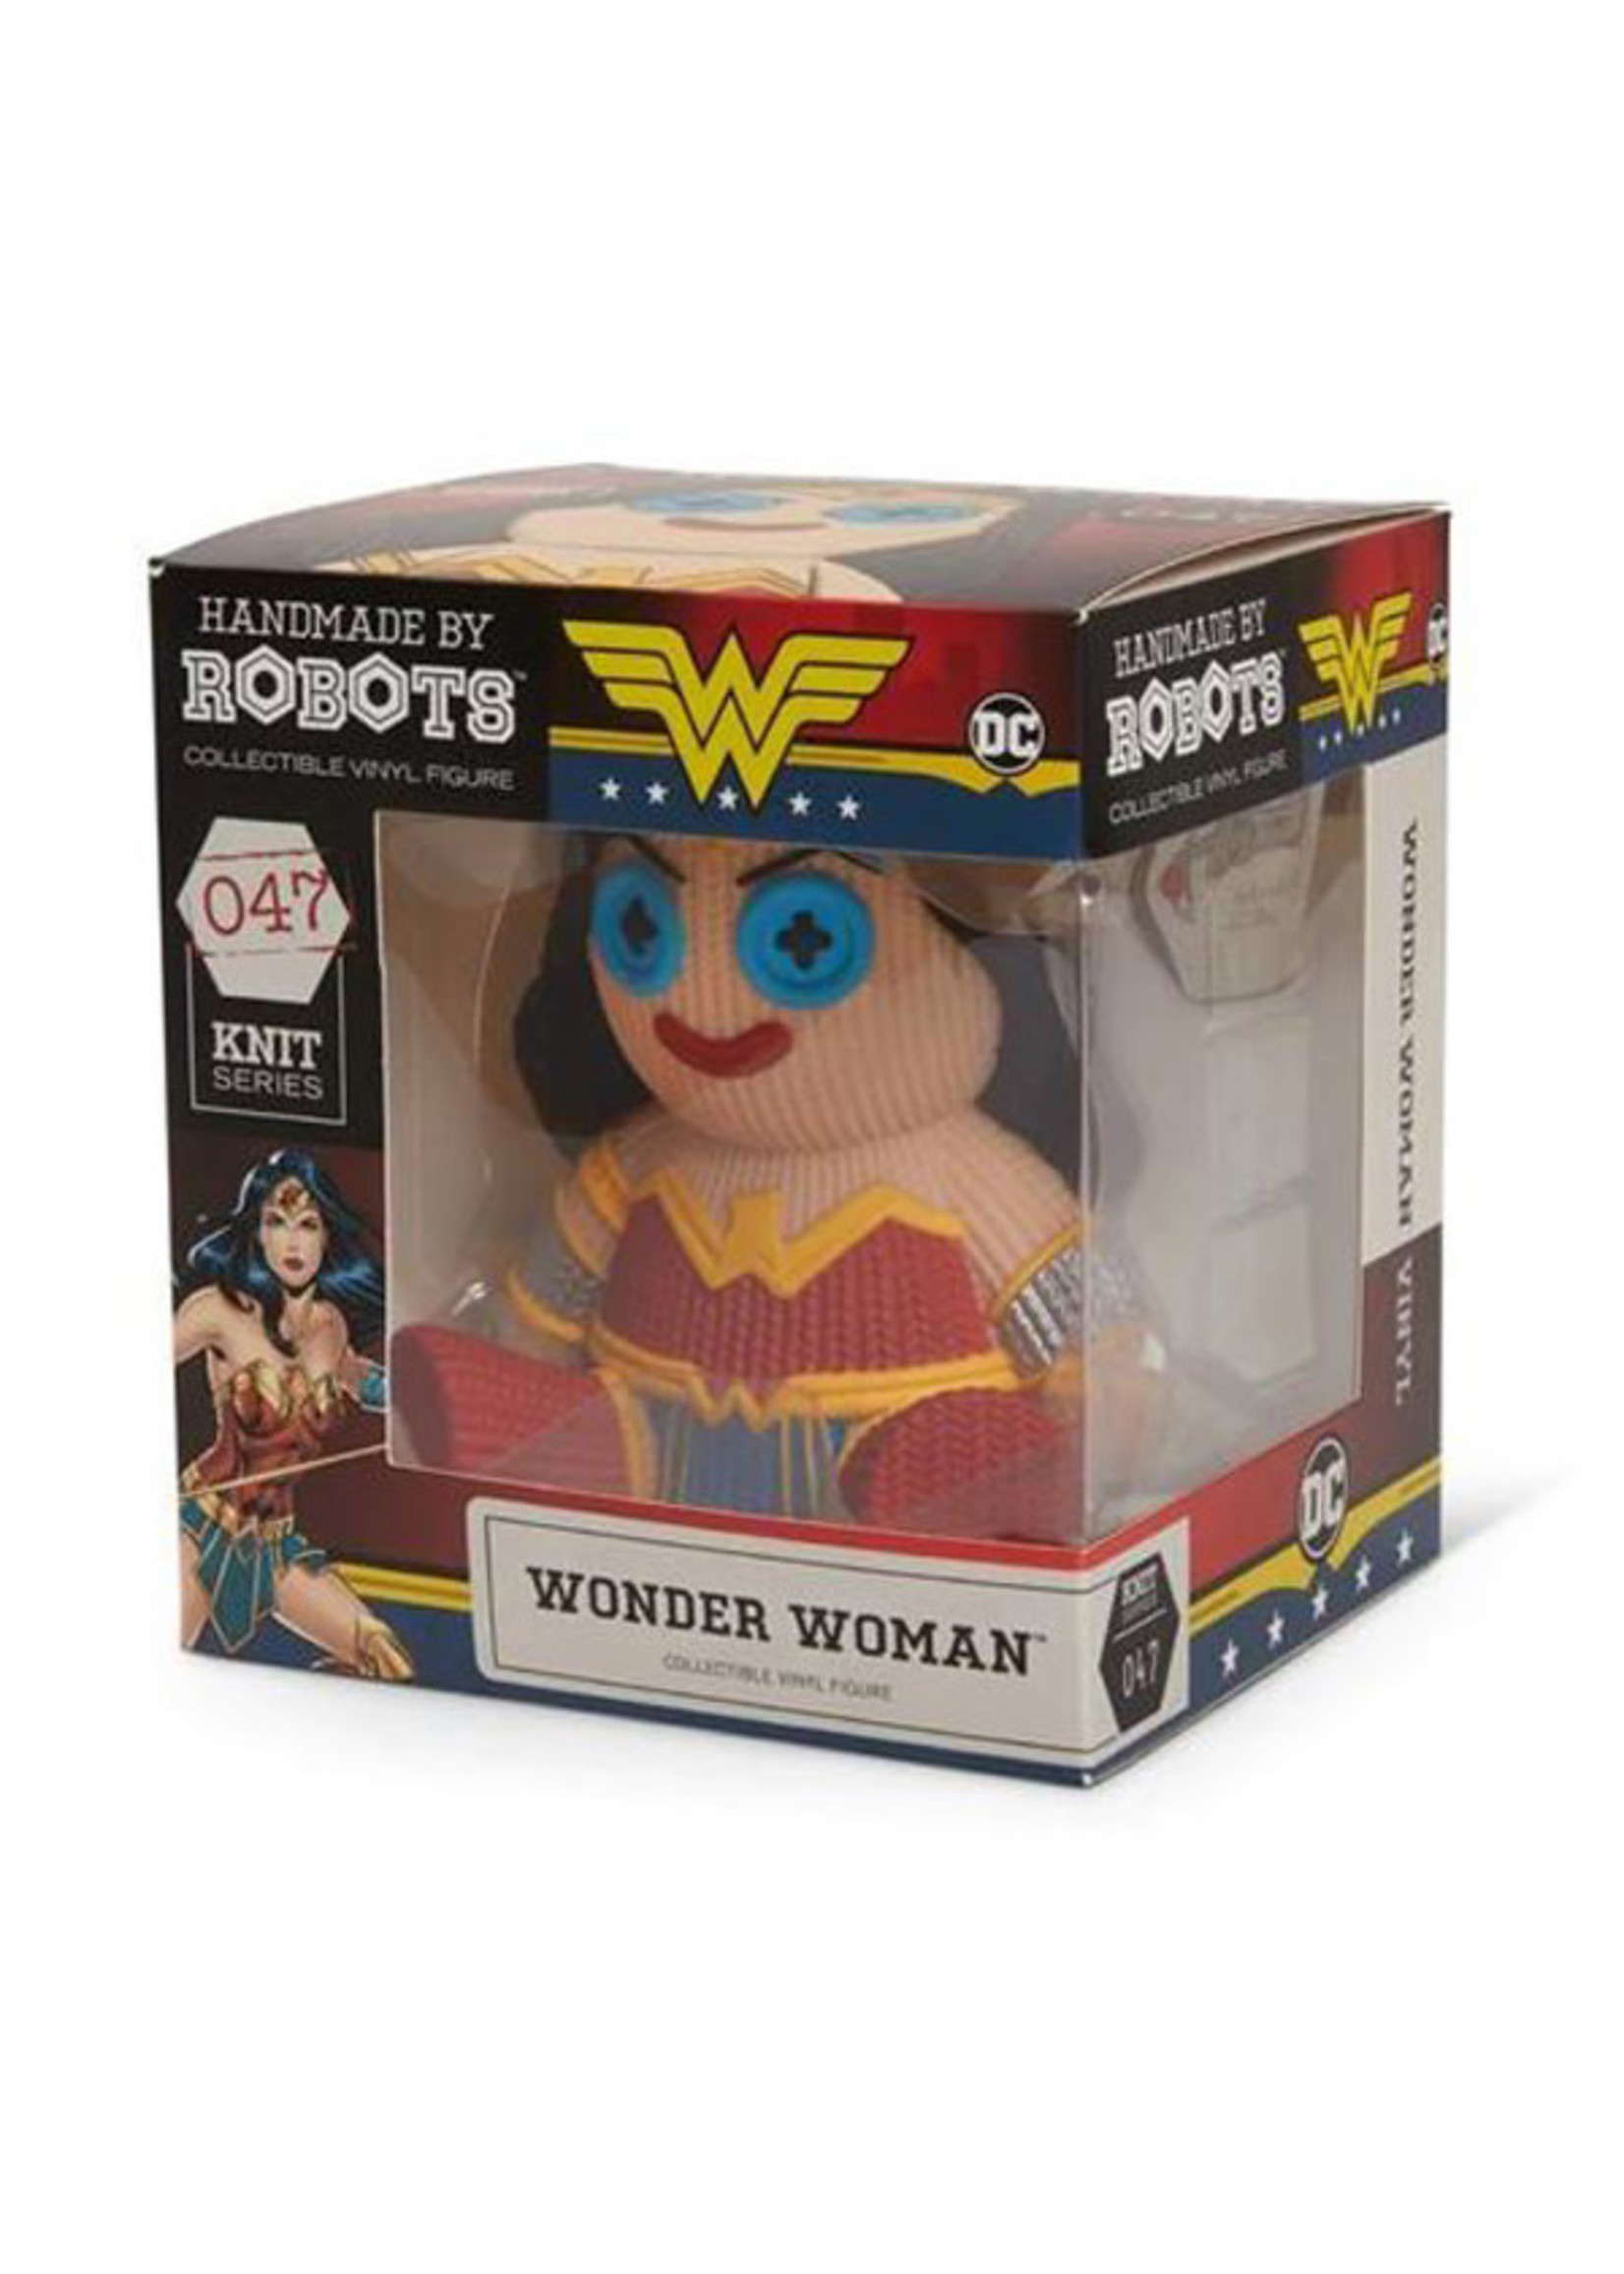 DC COMICS WONDER WOMAN HANDMADE BY ROBOTS 5